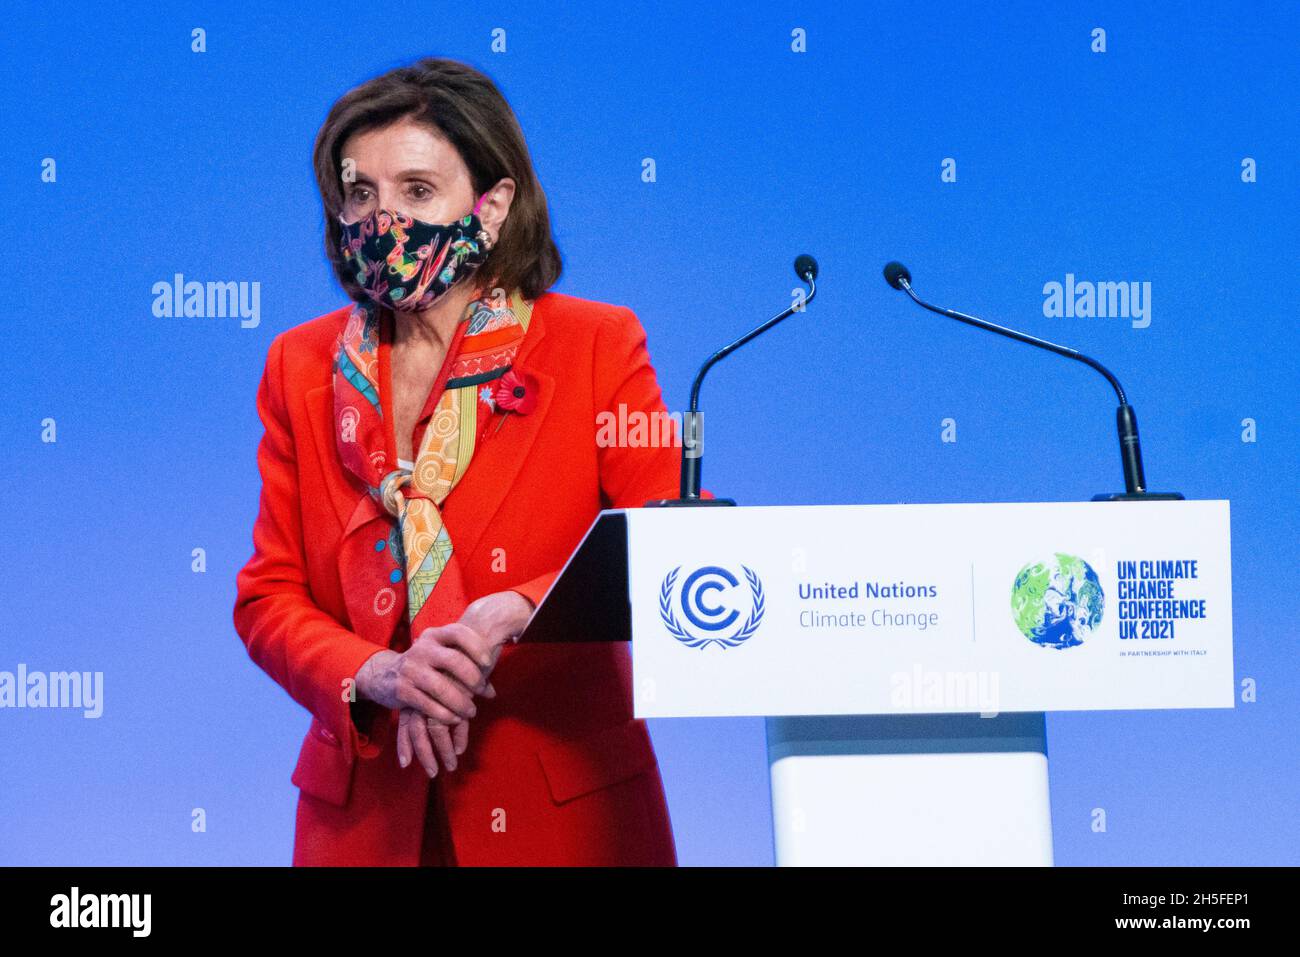 Glasgow, Scotland, UK. 9th November 2021. Day ten of COP26 climate summit. Nancy Pelosi, Speaker of the United States House of Representatives talks at press conference. Iain Masterton/Alamy Live News. Stock Photo